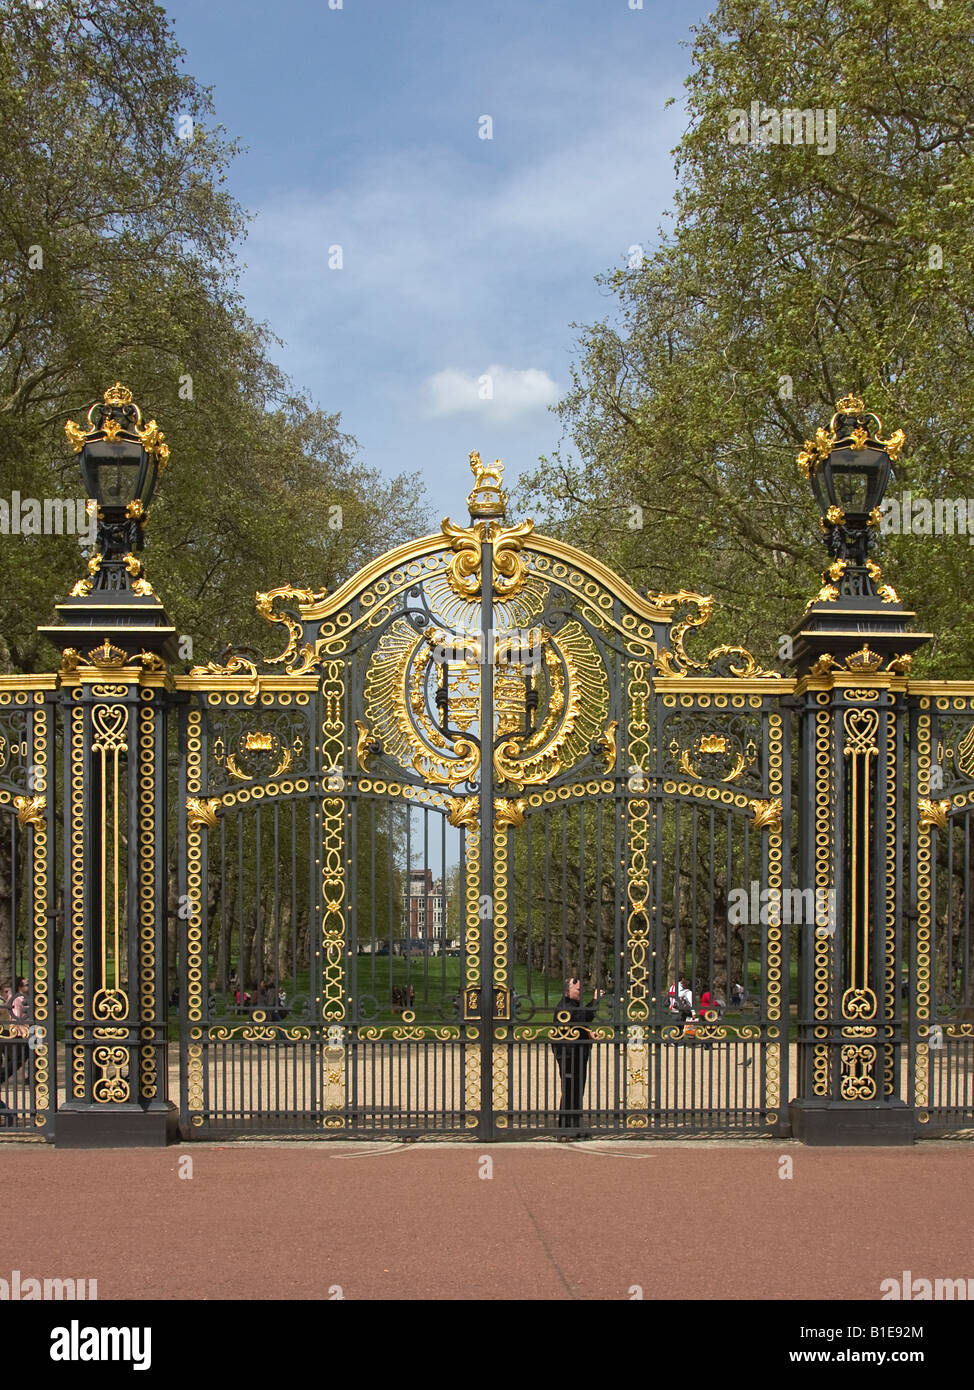 Kanada-Tore am Buckingham Palace Park London England Stockfoto